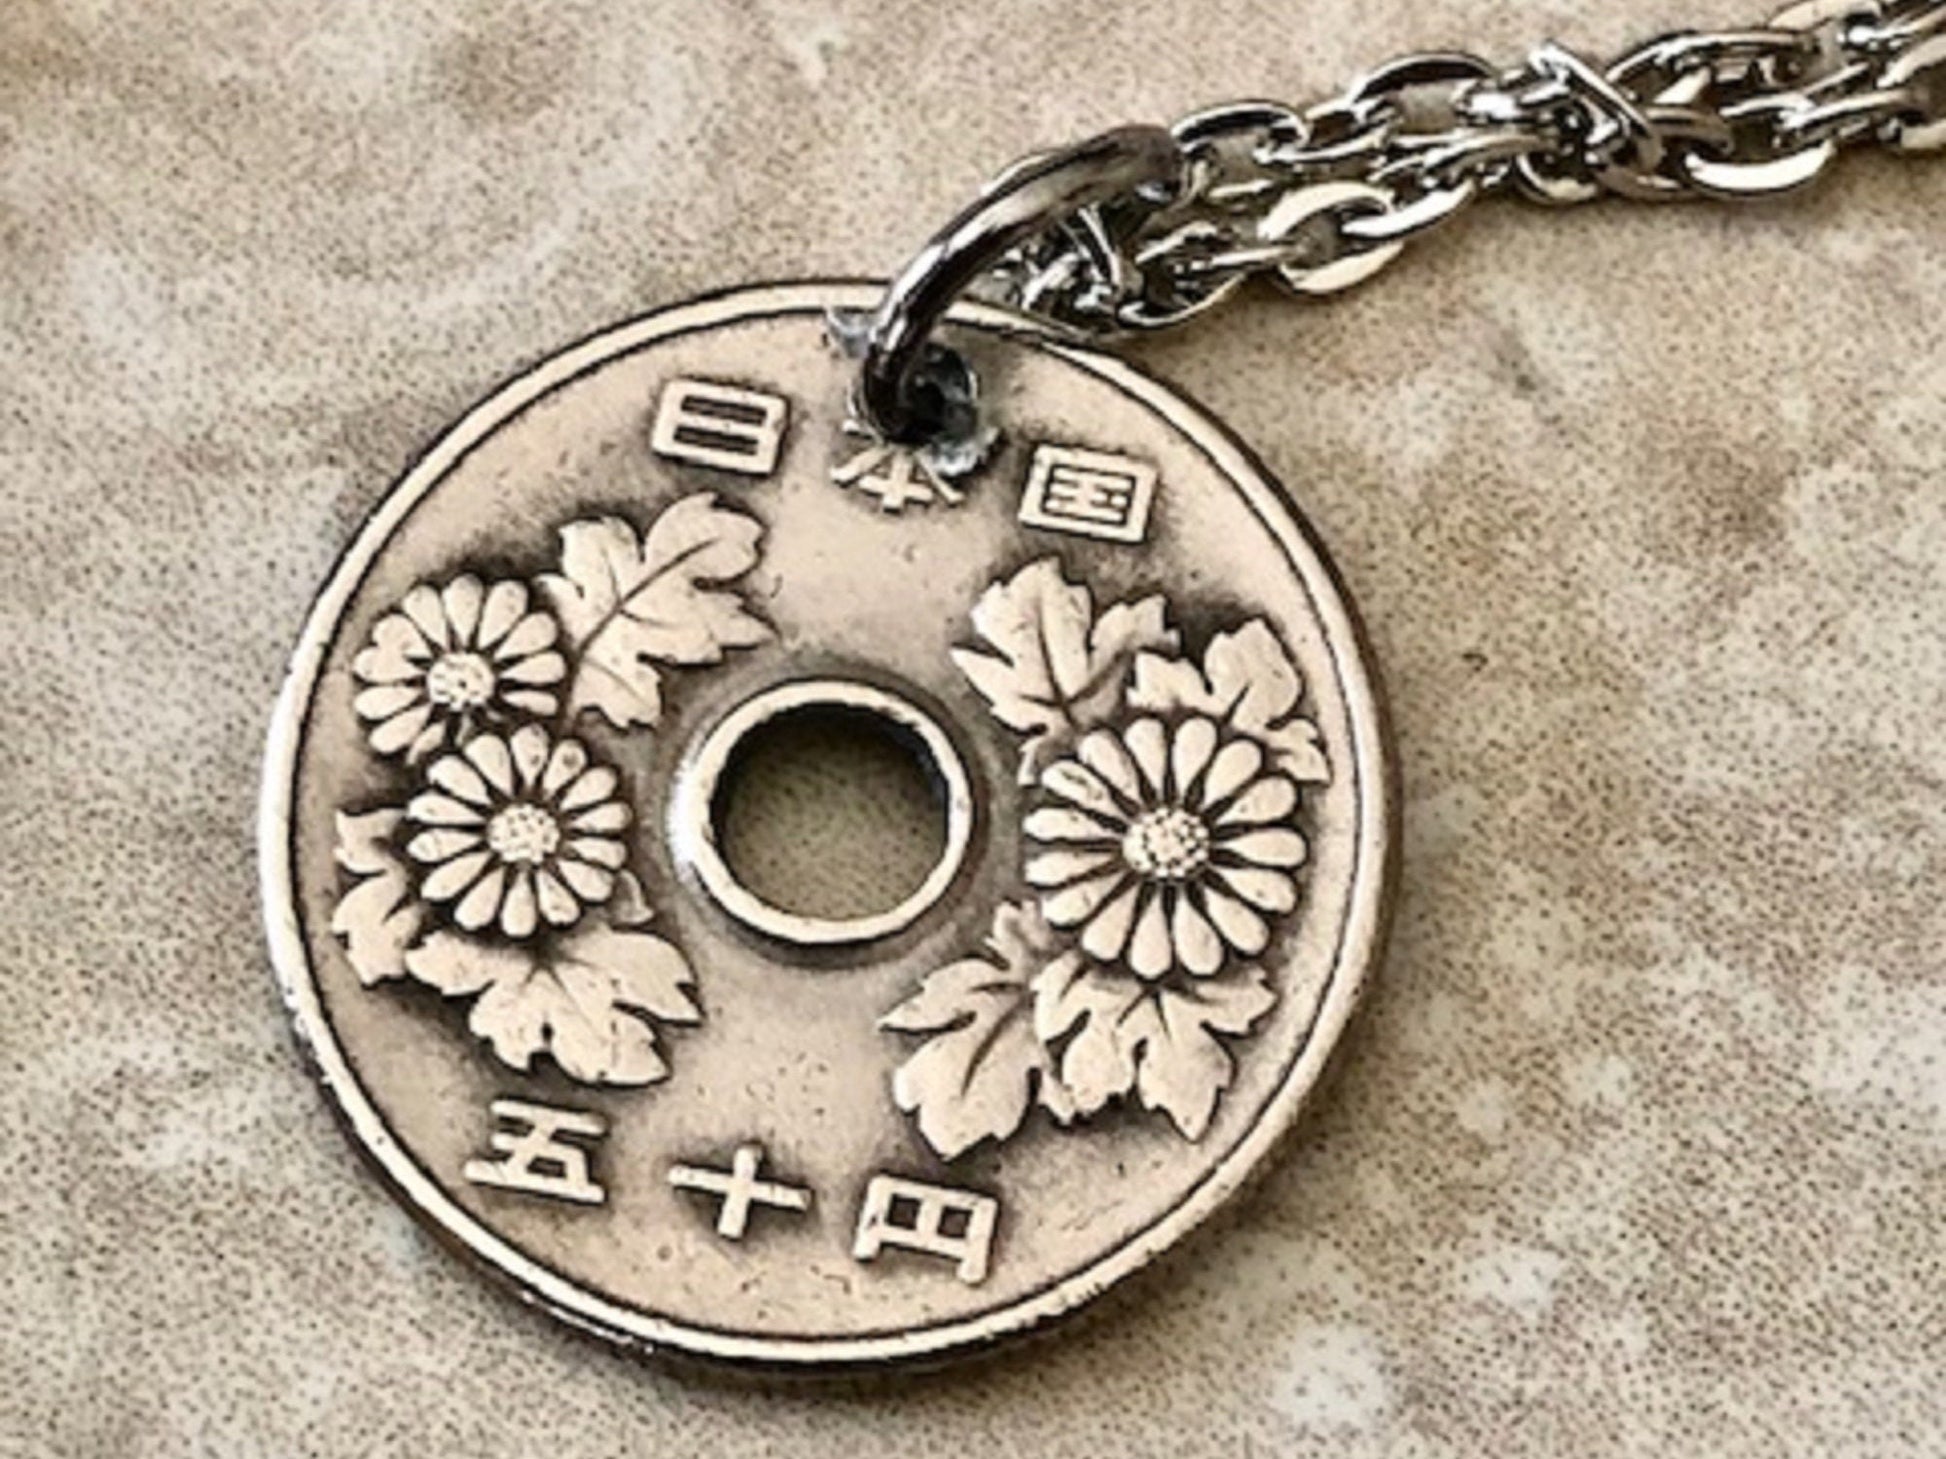 Japan Coin Necklace 50 Yen Pendant Japanese Vintage Rare Coin Enthusiast Fashion Accessory Handmade